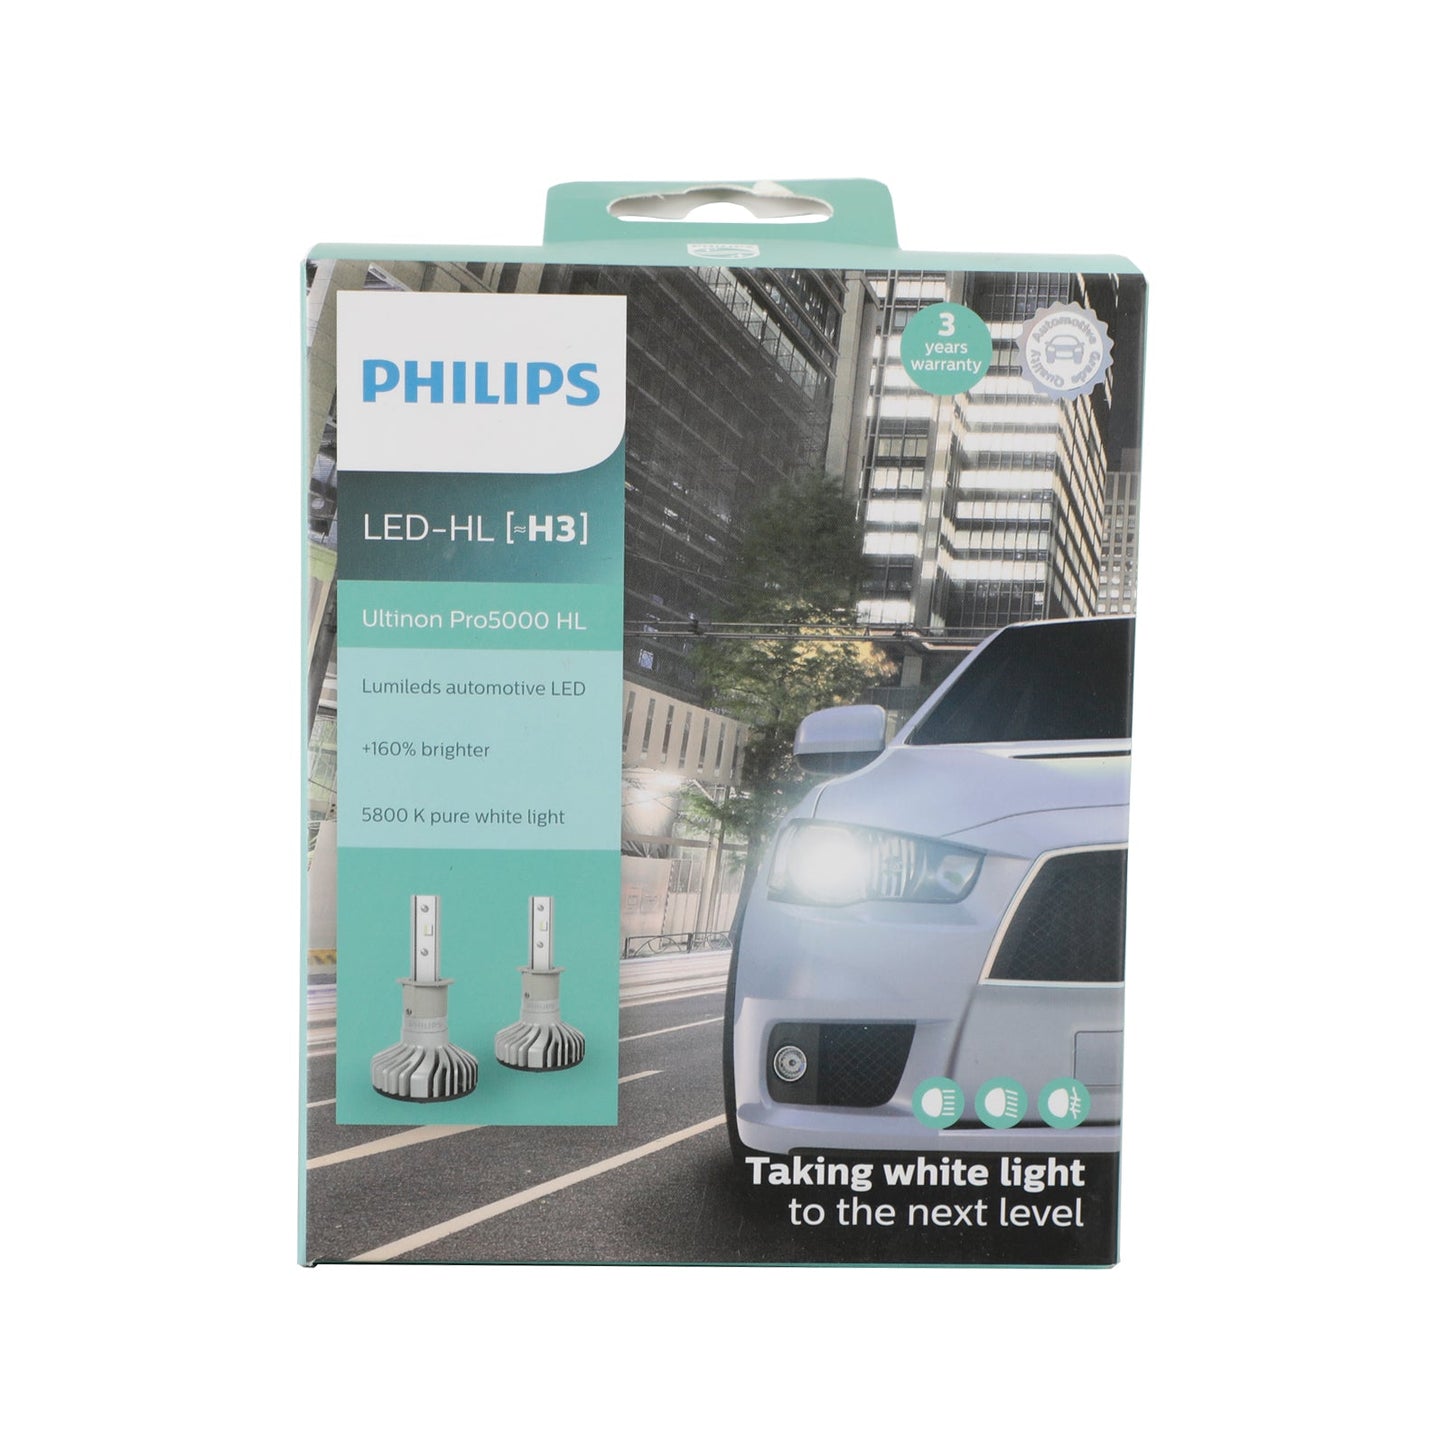 For Philips 11336U50CWX2 Ultinon Pro5000HL LED Headlight H3 15W +160% 5800K